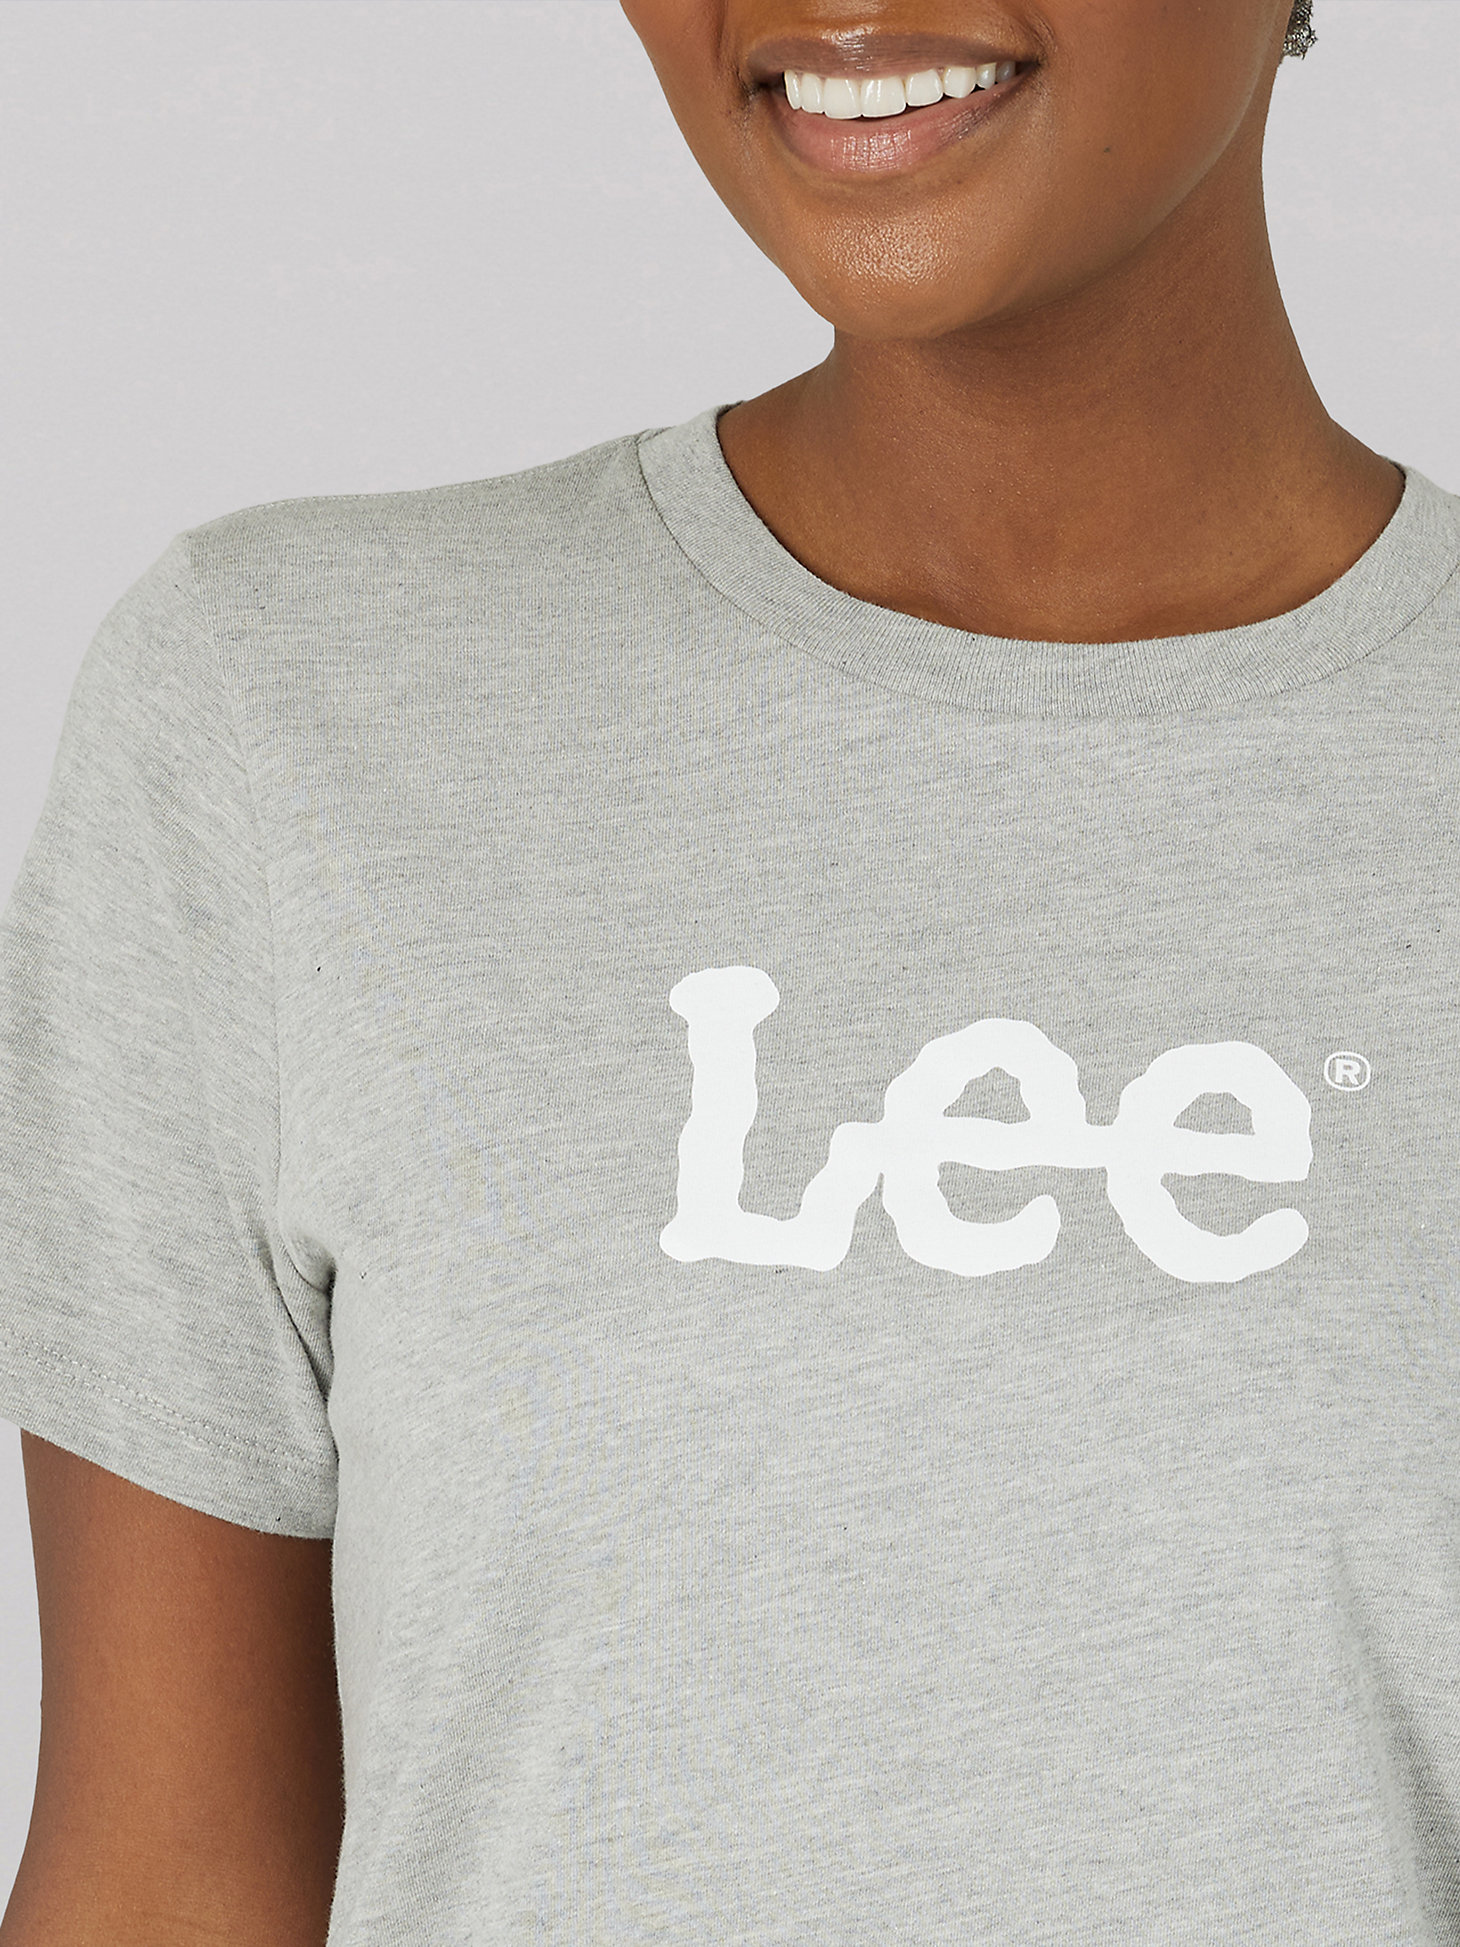 Women's Lee Bold Logo Tee in Light Grey Heather alternative view 2